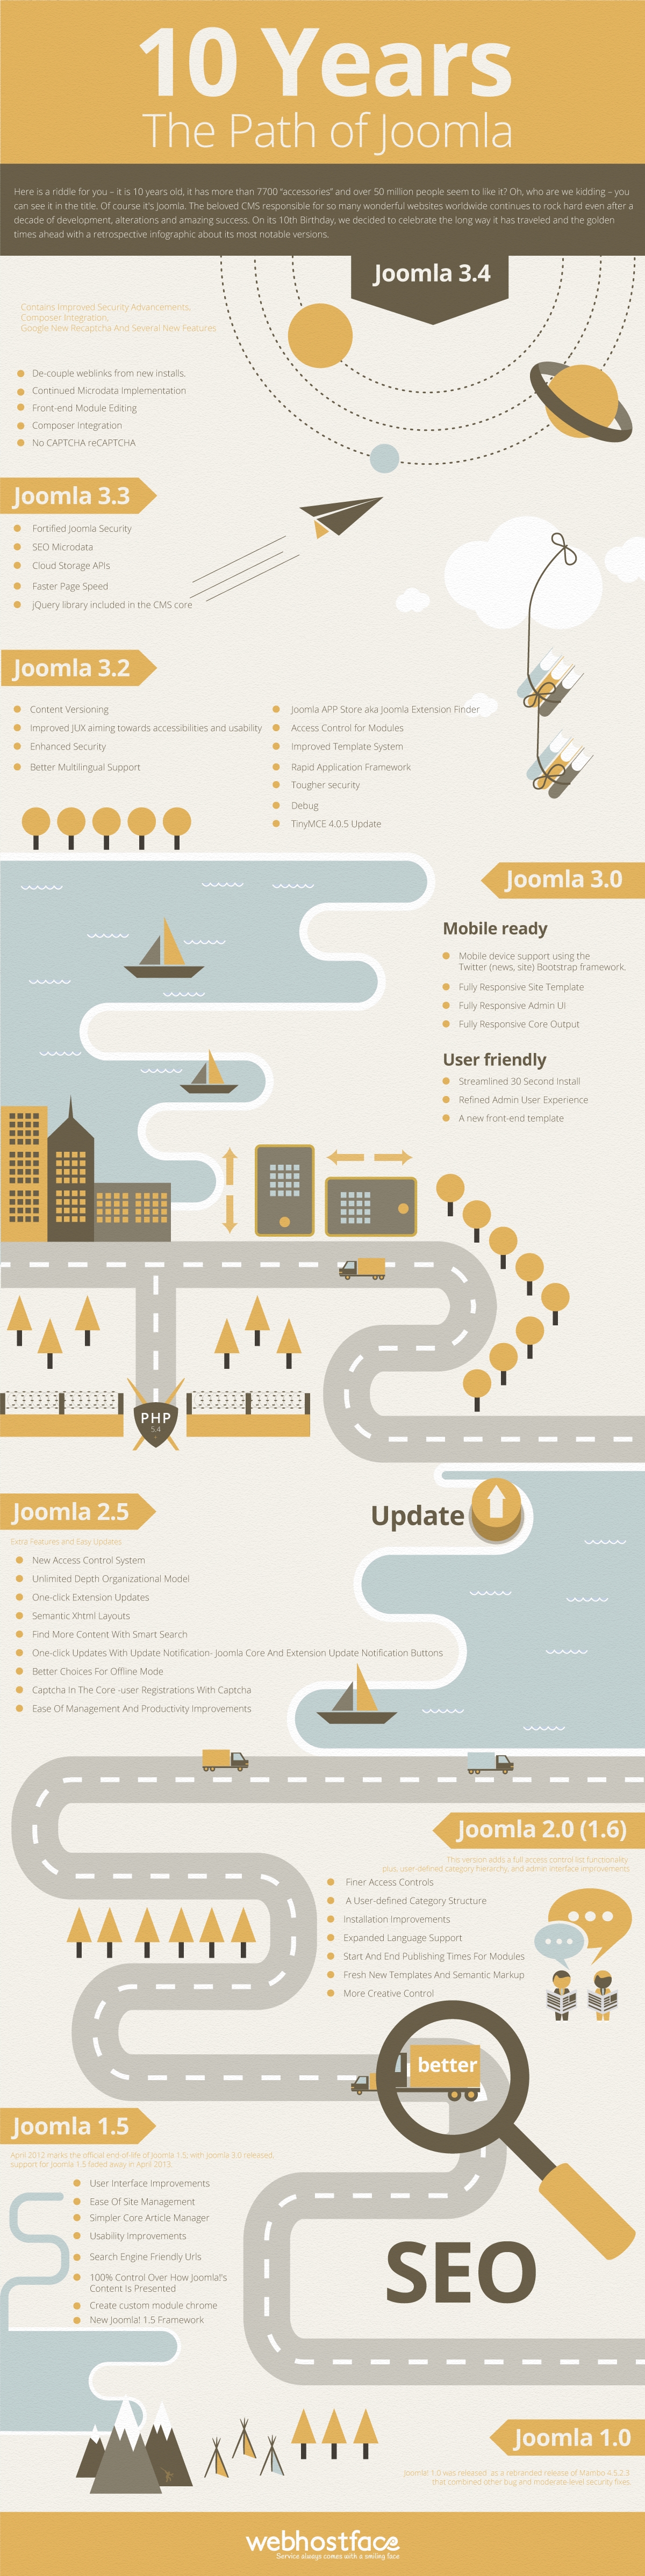 Joomla Infographic 10 years birthday